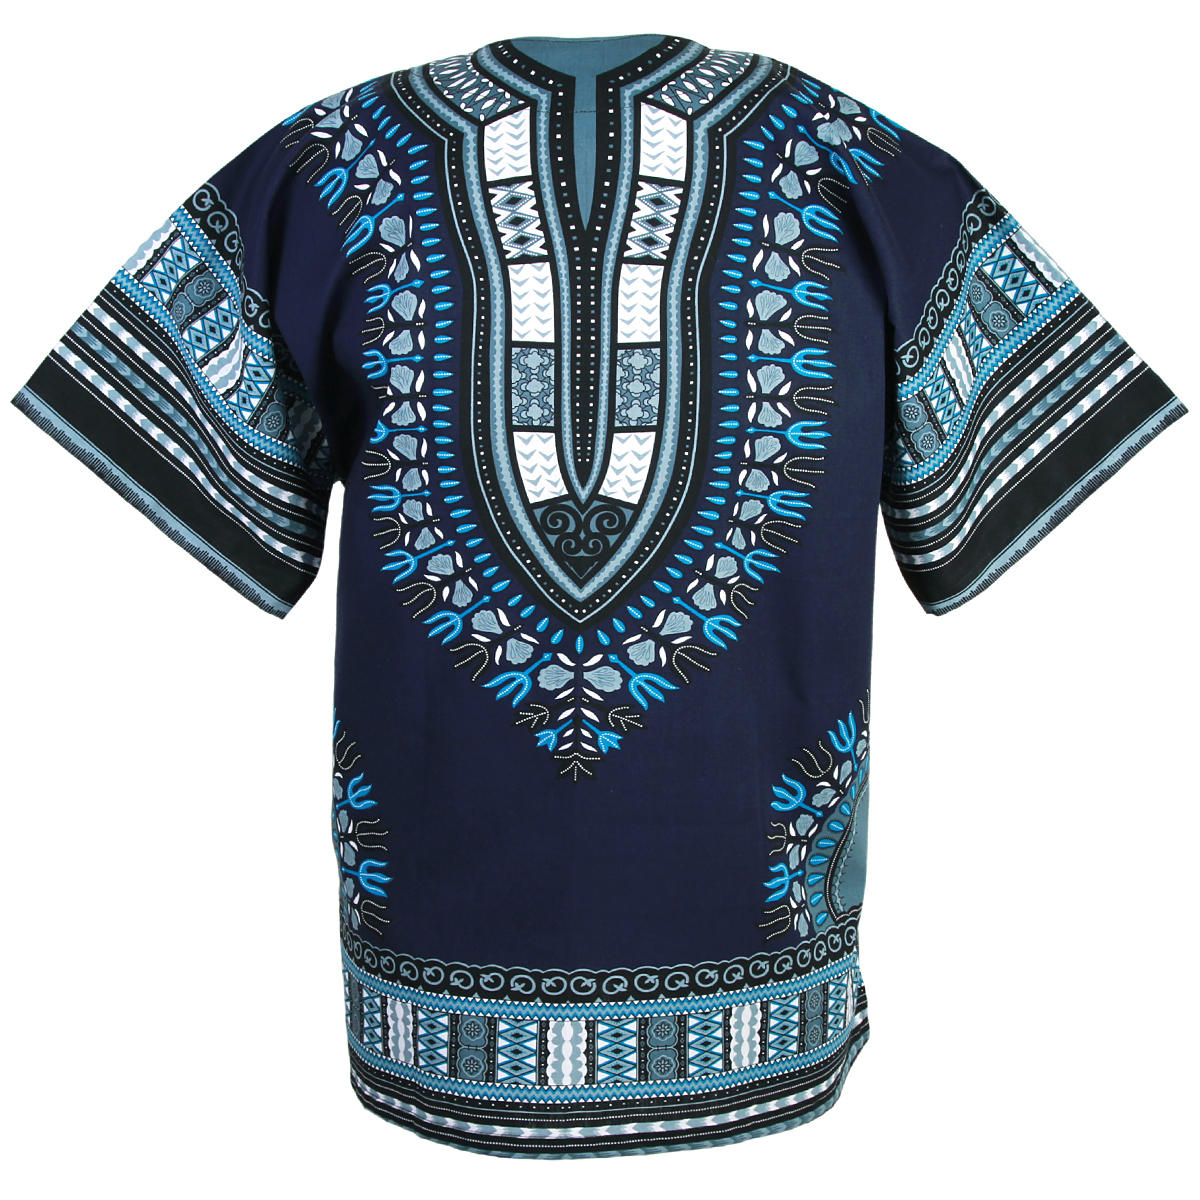 Navy Blue African Dashiki Shirt poncho - Dashiki Shirt African